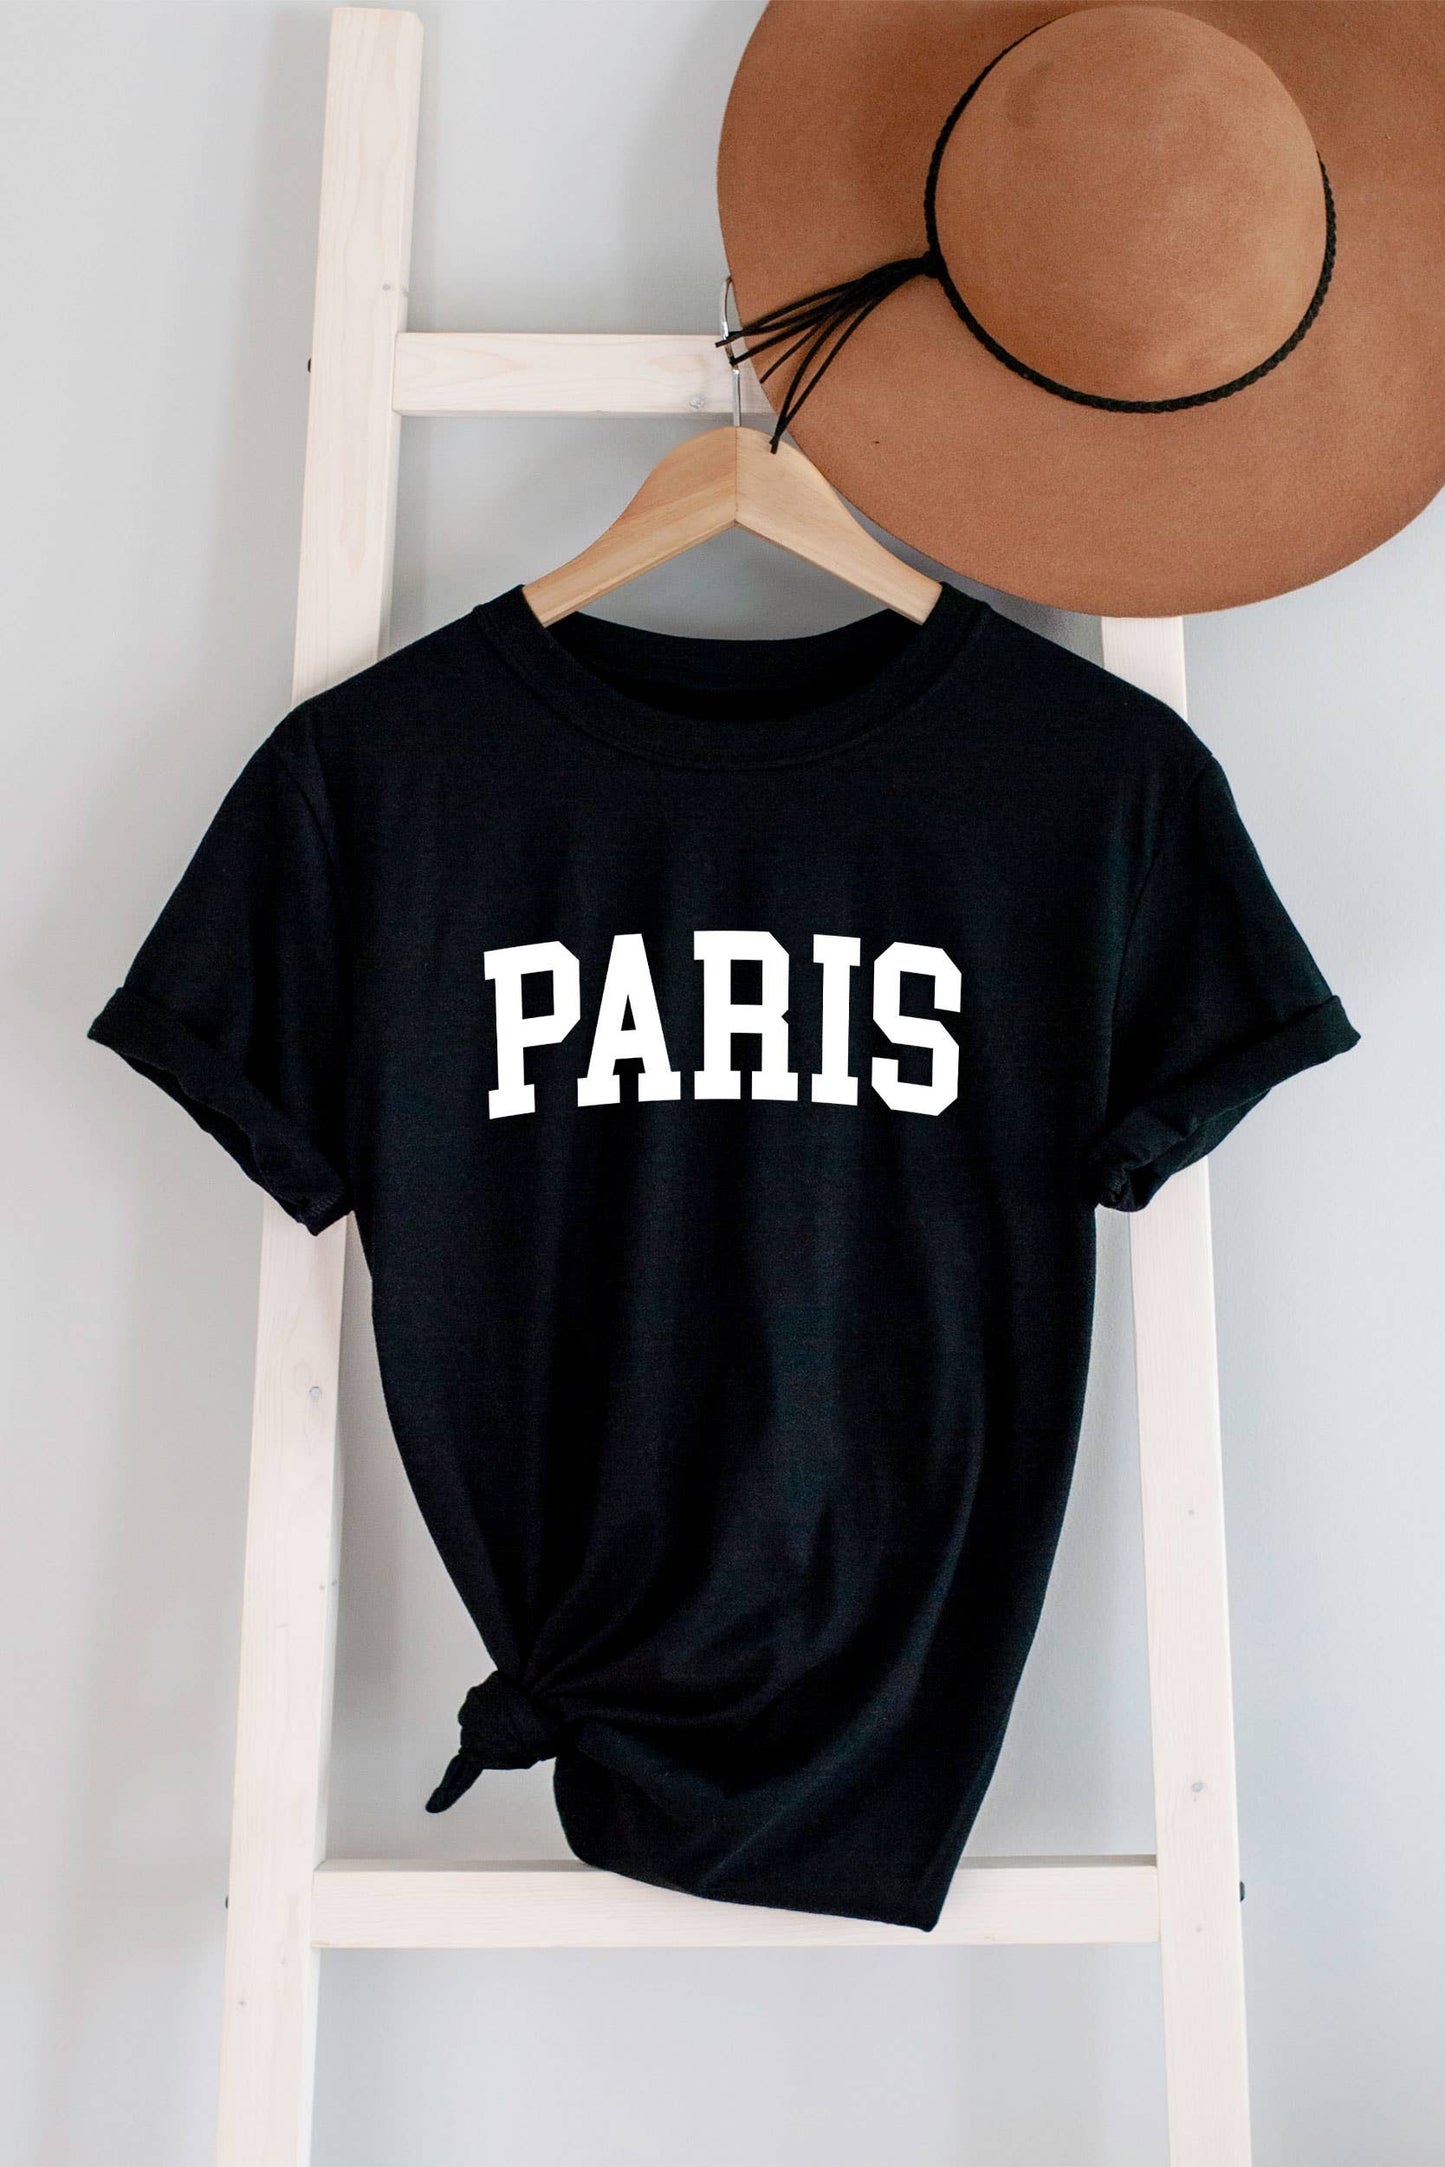 Paris, Unisex Round Neck Short Sleeve T-Shirt: L / H Grey/Black